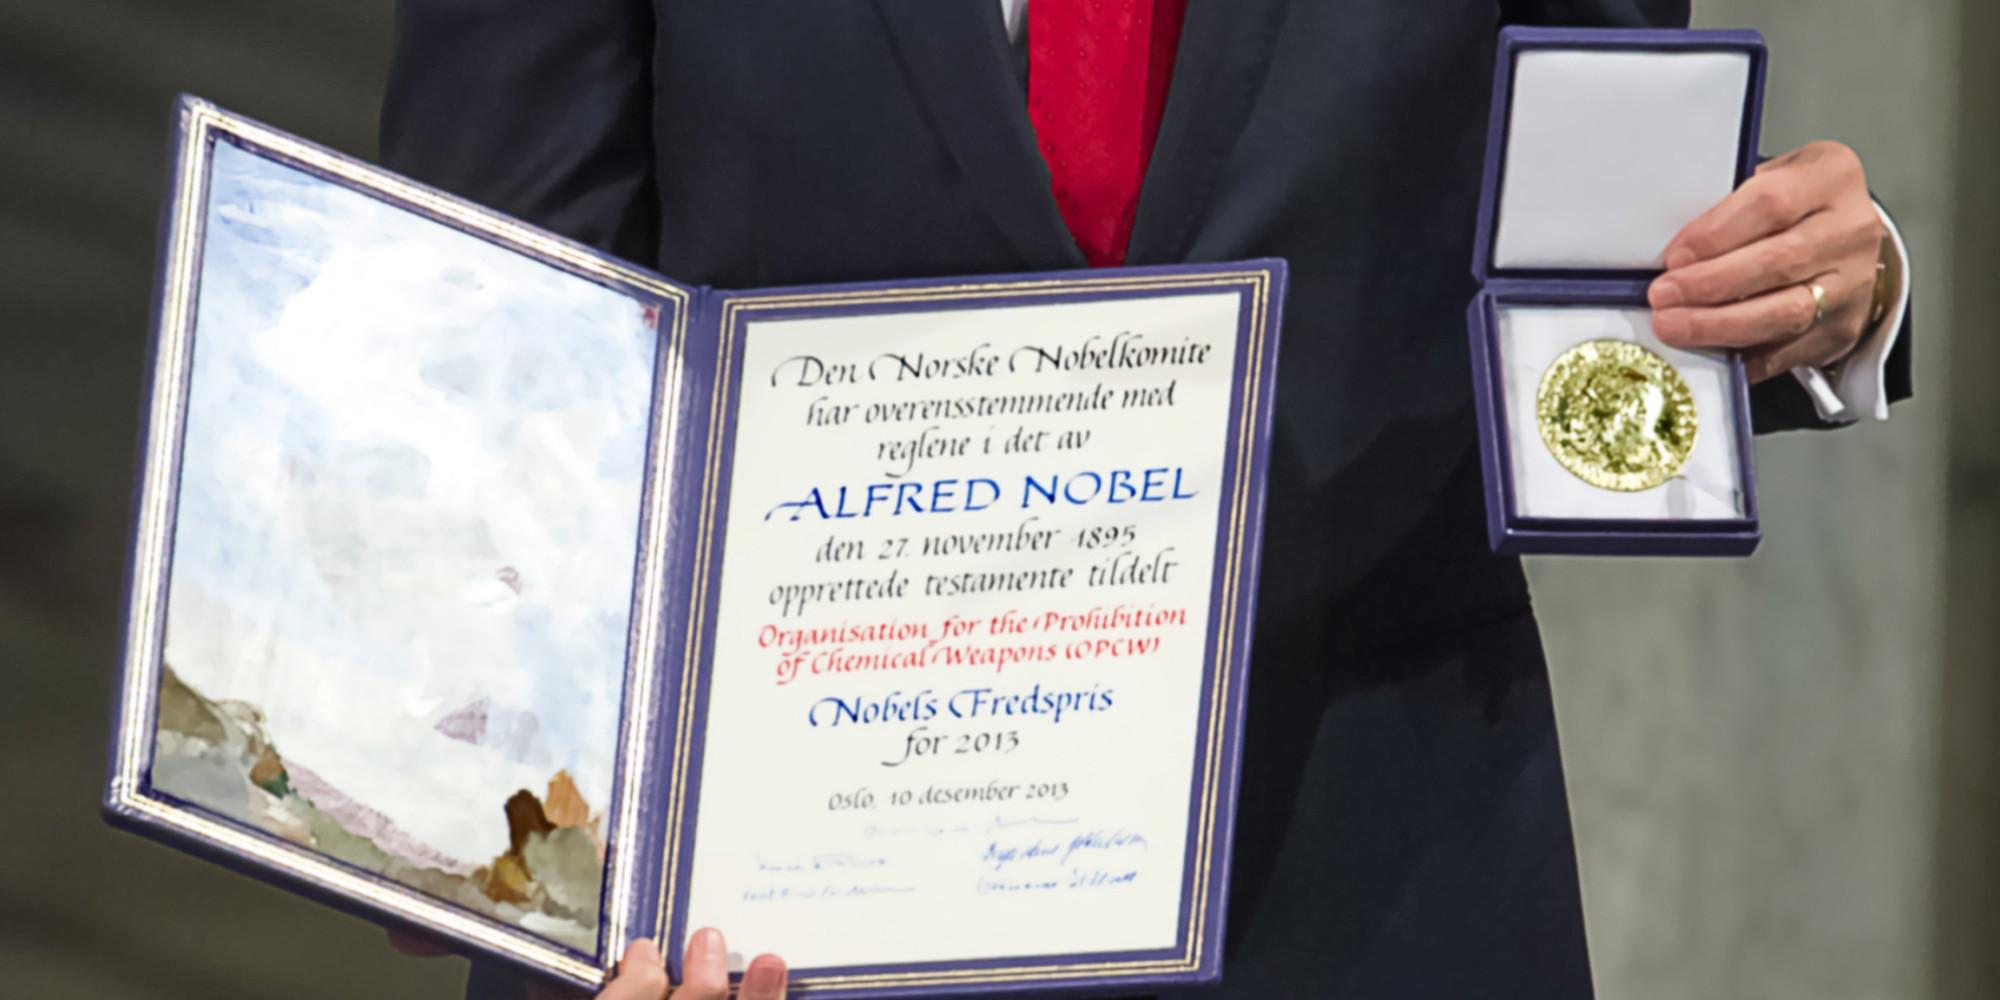 OSLO, NORWAY - DECEMBER 10: Ahmet Uzumcu Director-General of Turkey attends the Nobel Peace Prize awards ceremony on December 10, 2013 in Oslo, Norway. (Photo by Nigel Waldron/WireImage)